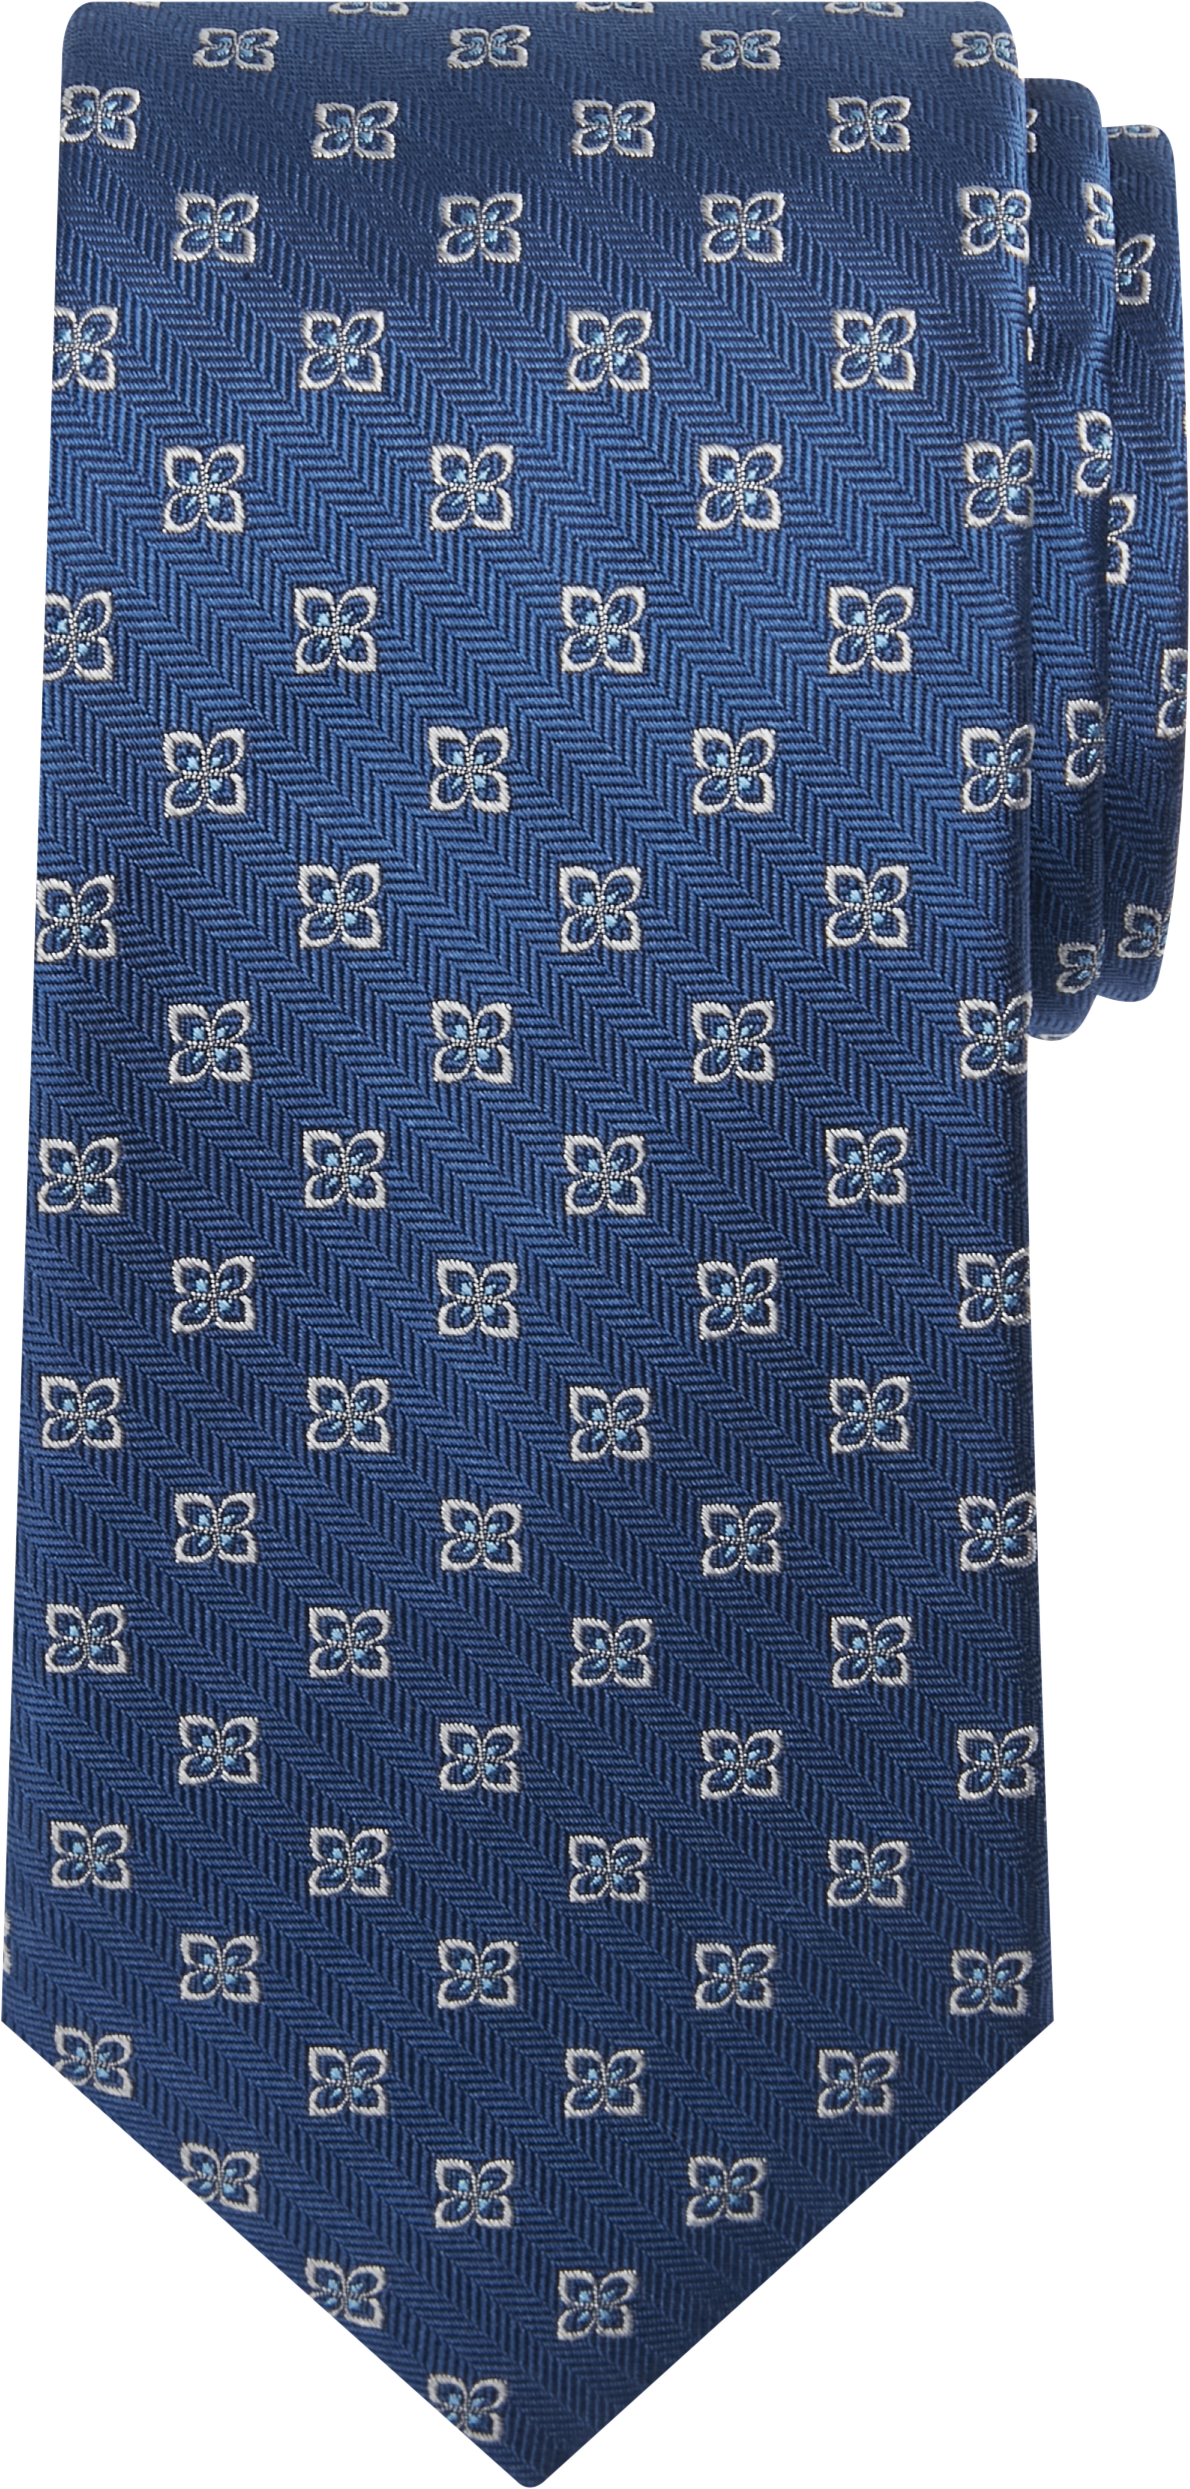 Narrow Starry Tie